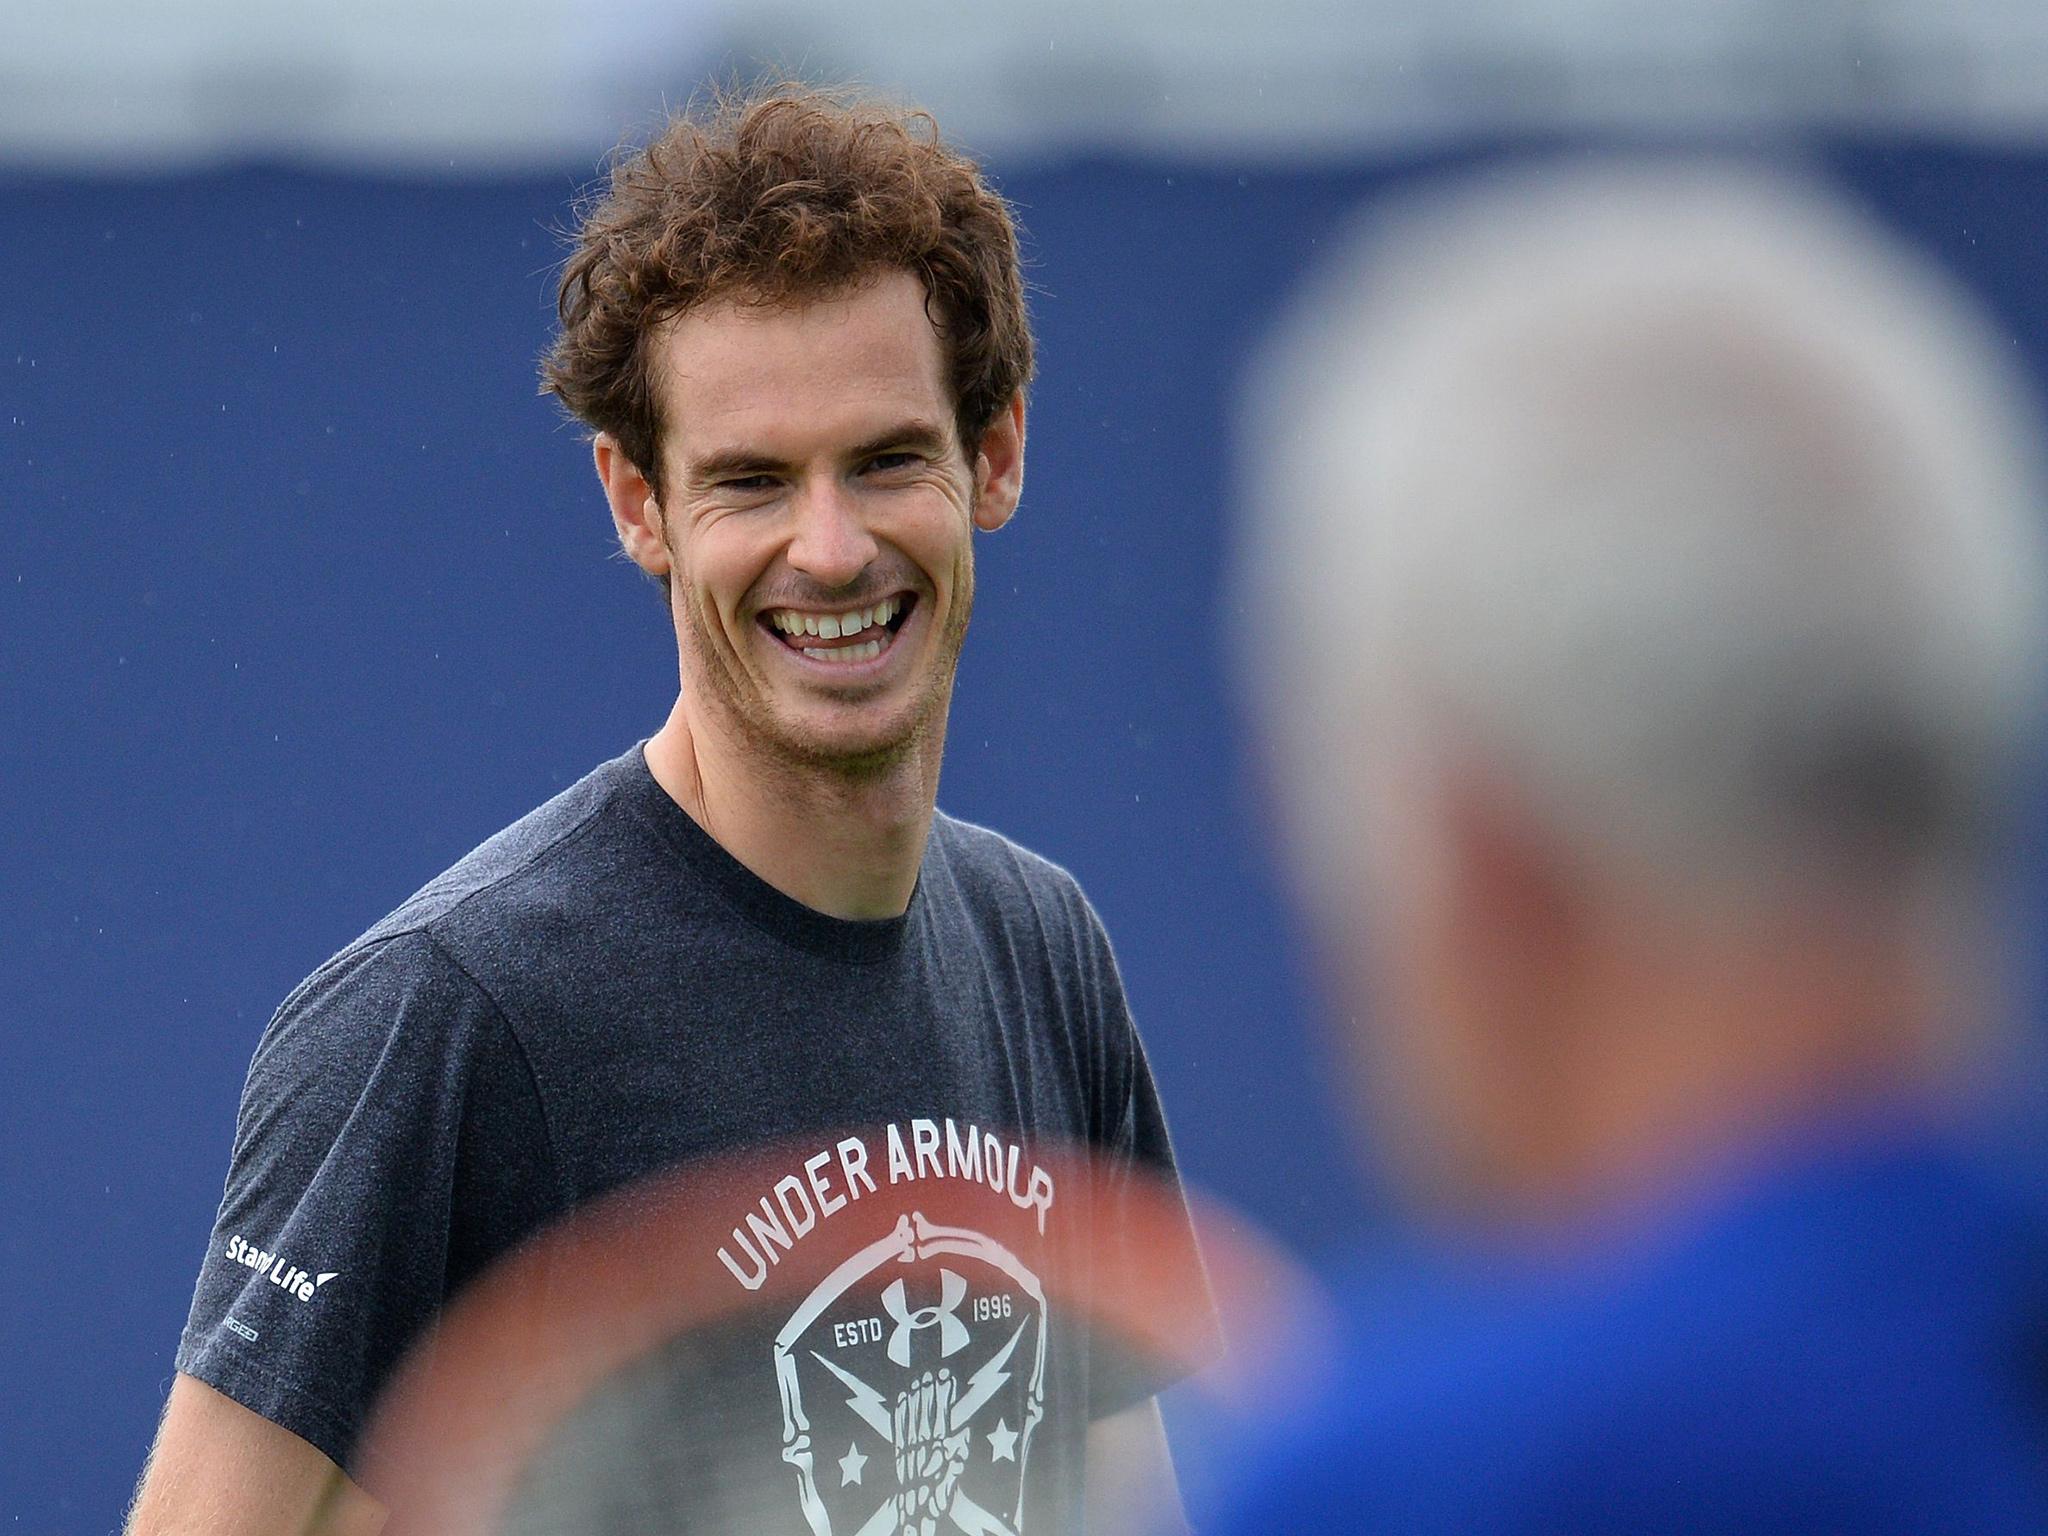 Andy Murray enjoys a joke with John McEnroe